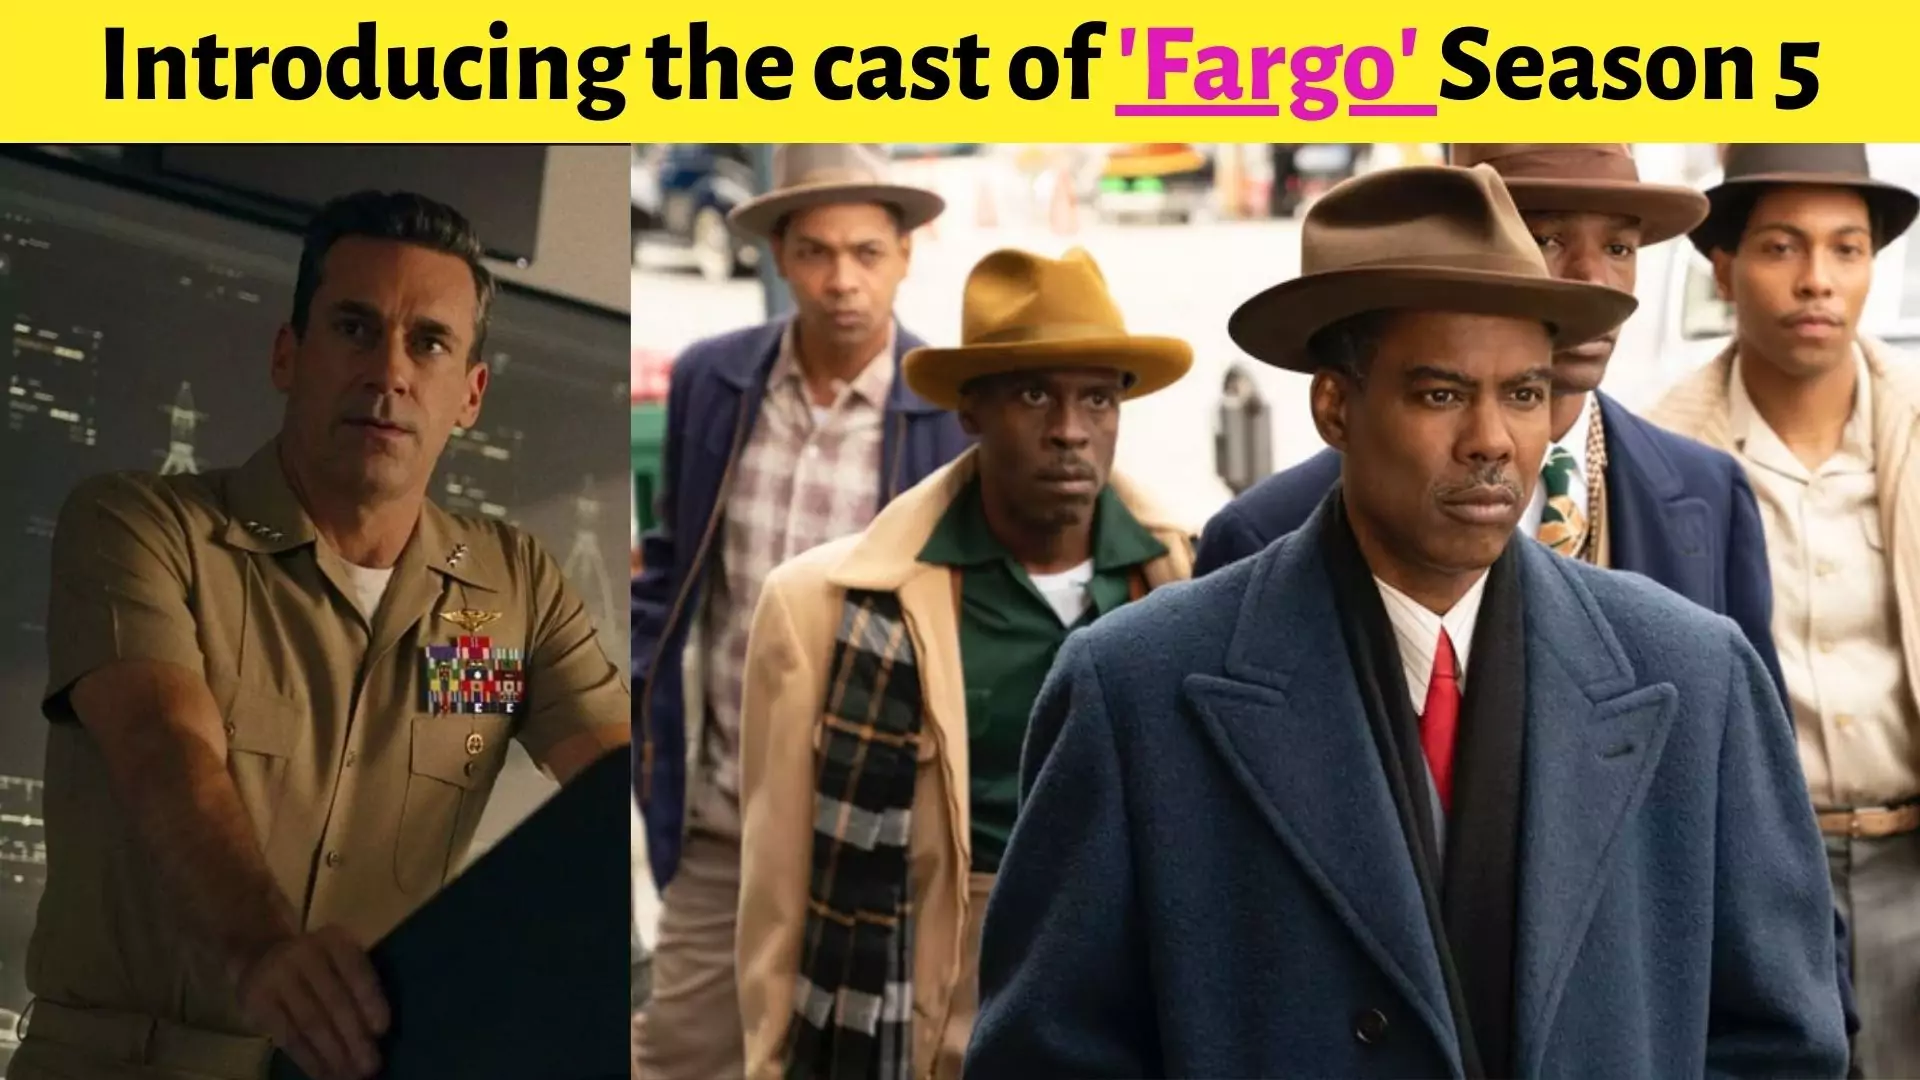 Introducing the cast of 'Fargo' Season 5